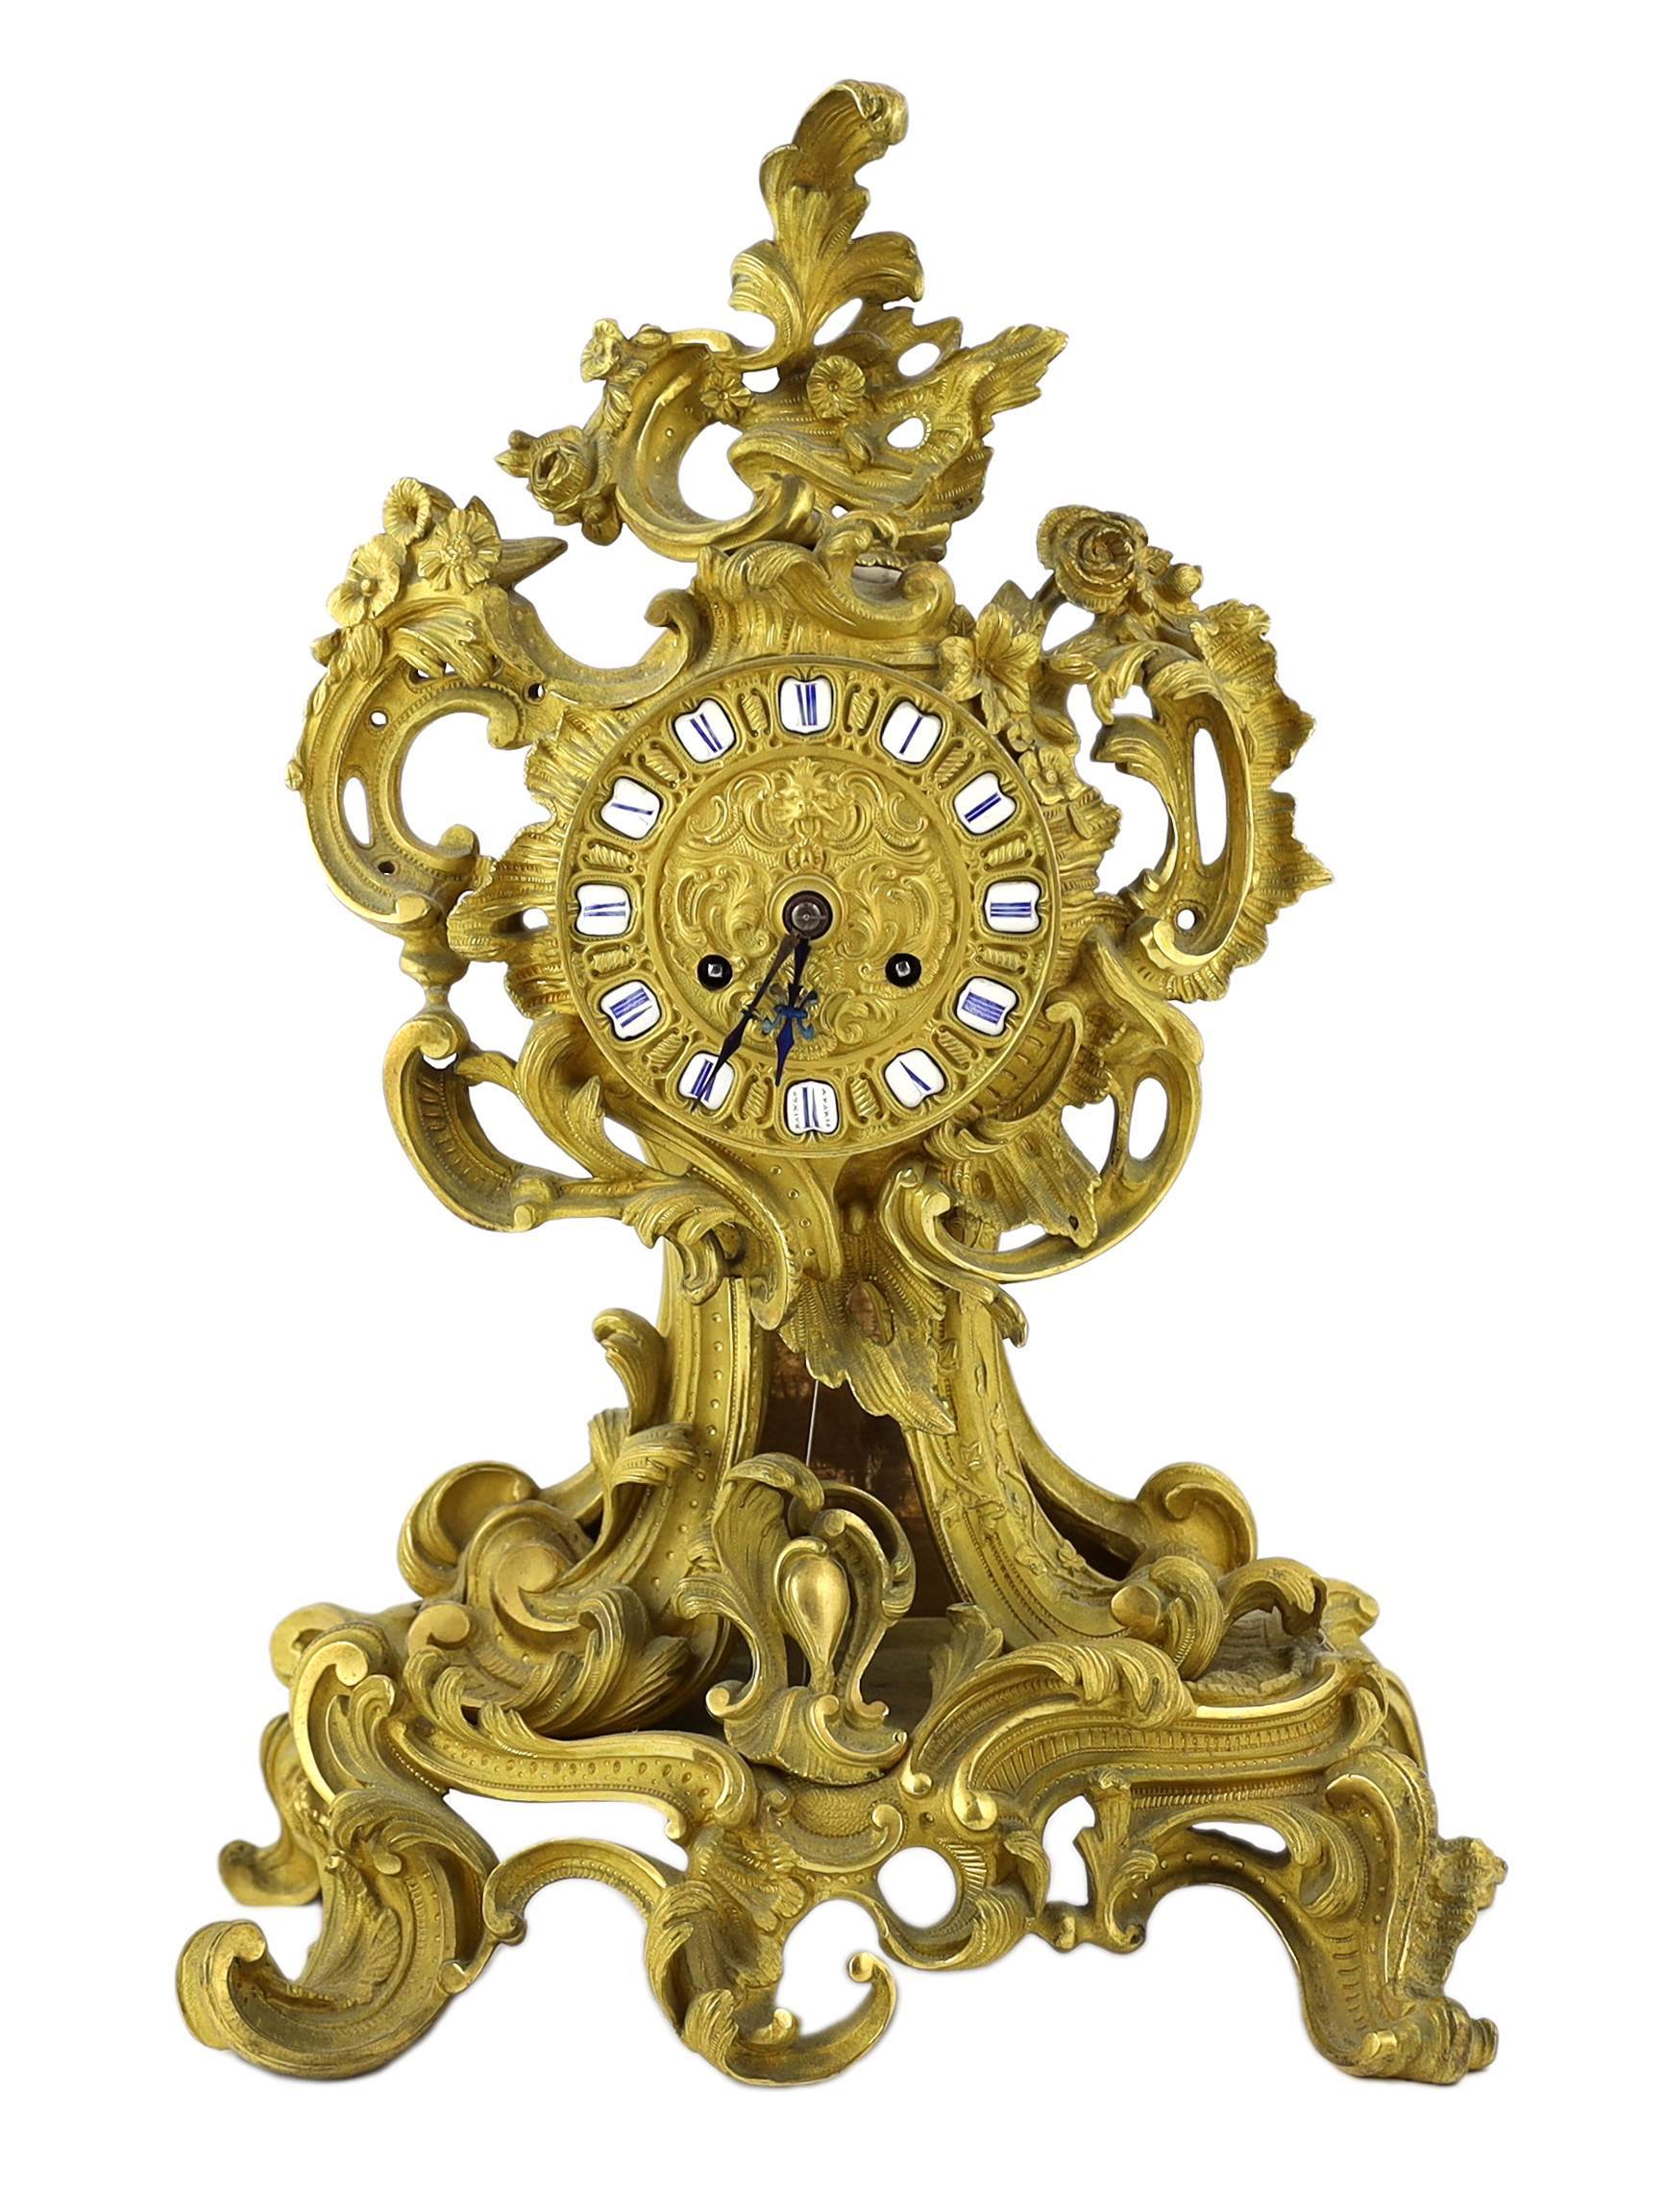 A 19th century French ormolu mantel clock, of asymmetrical scroll form, with enamelled tablet